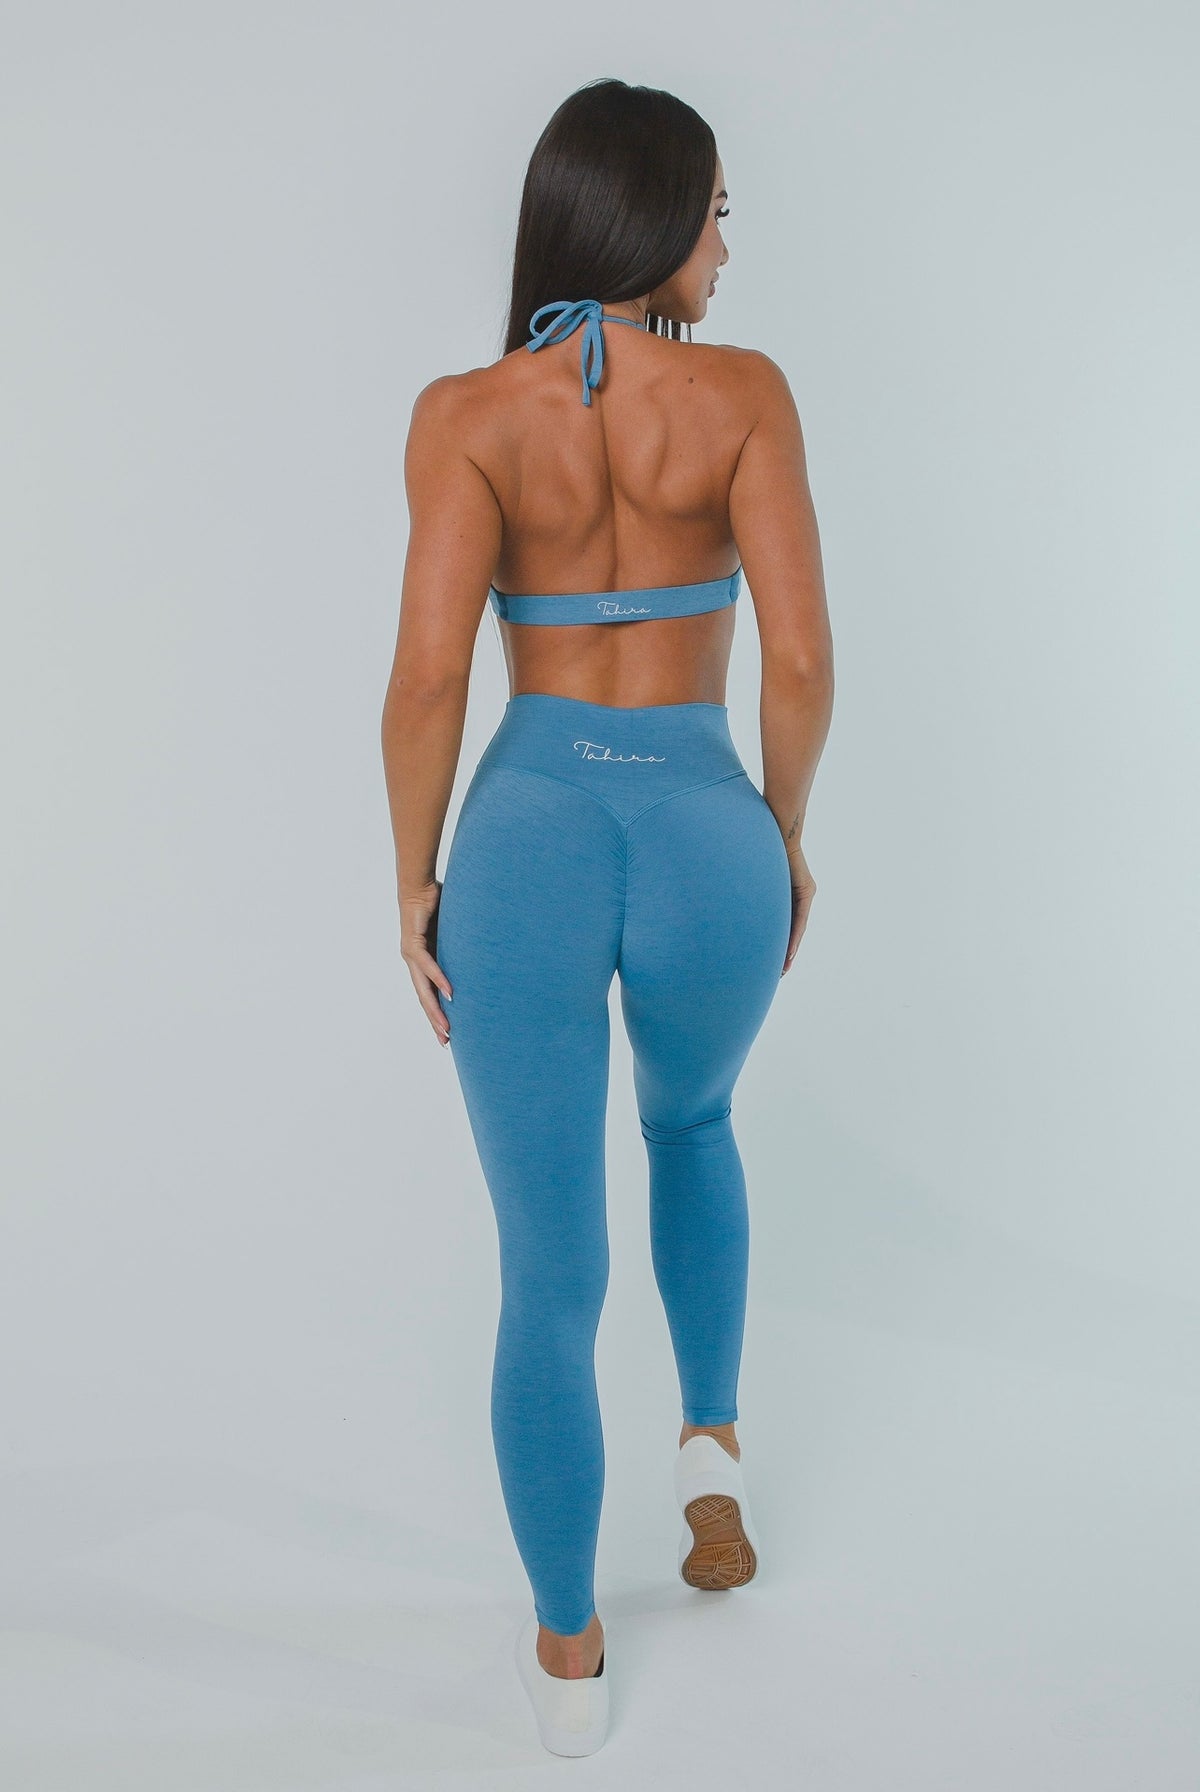 RISE BRA- BLUE - TAHIRA Official - Womens Gym Gear